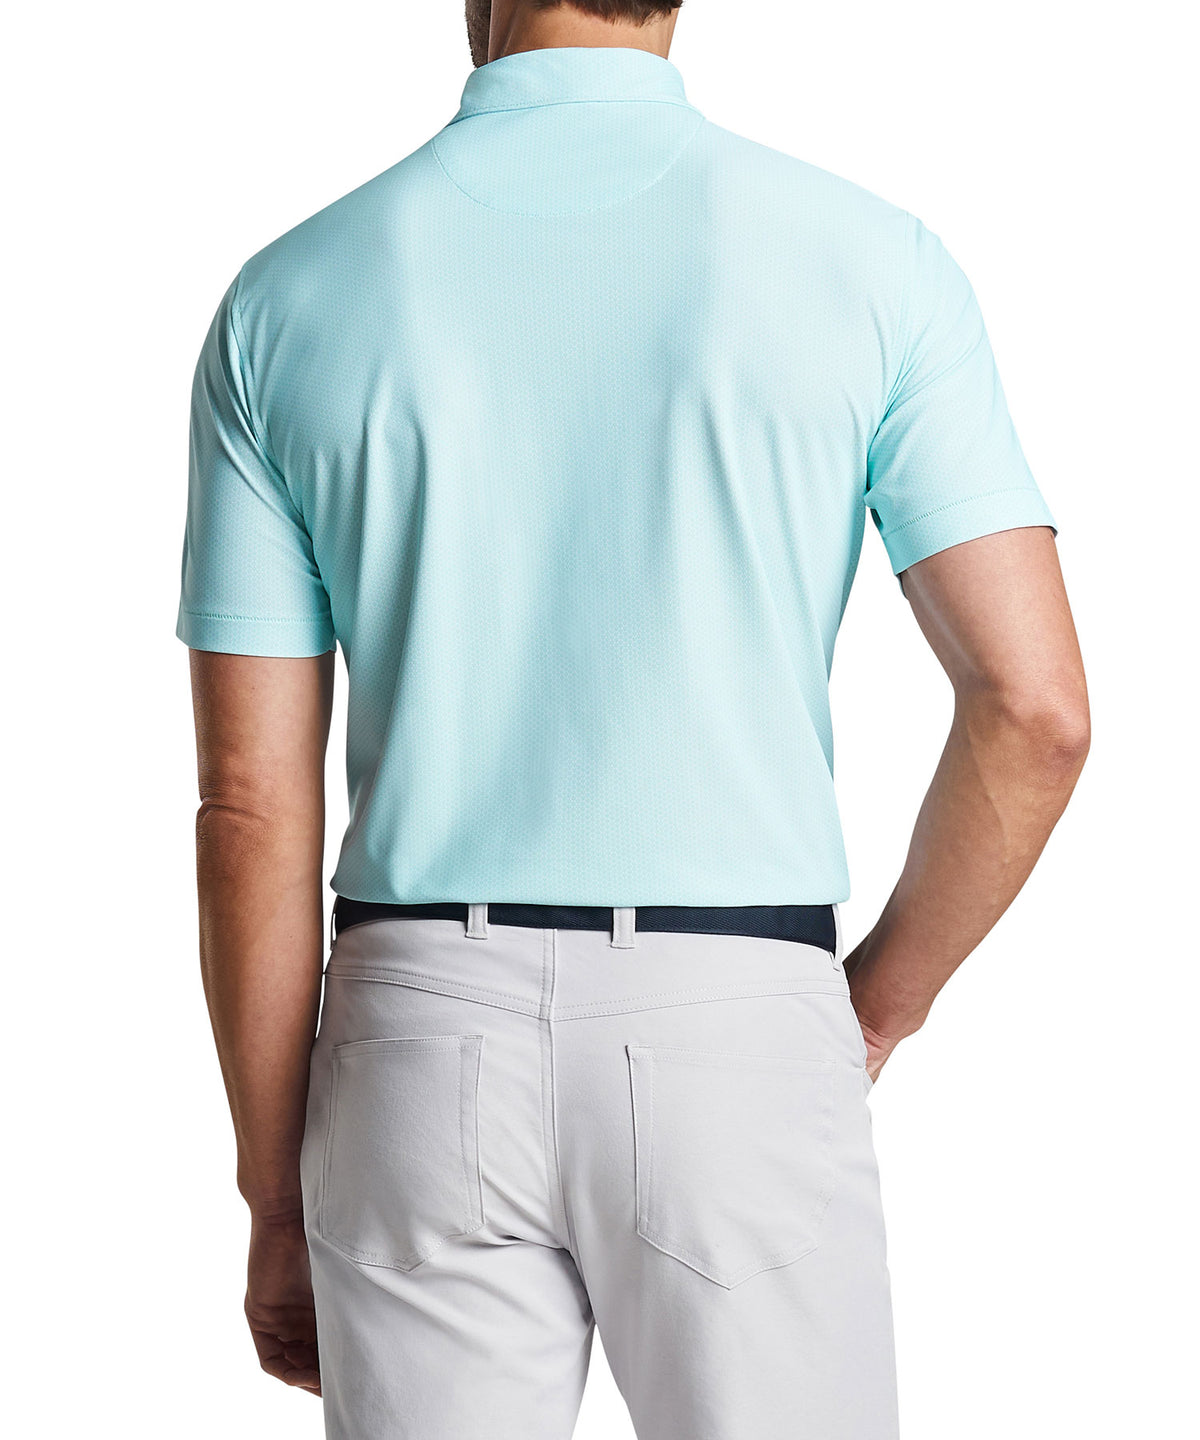 Peter Millar Short Sleeve Vienna Print Polo Knit Shirt, Men's Big & Tall